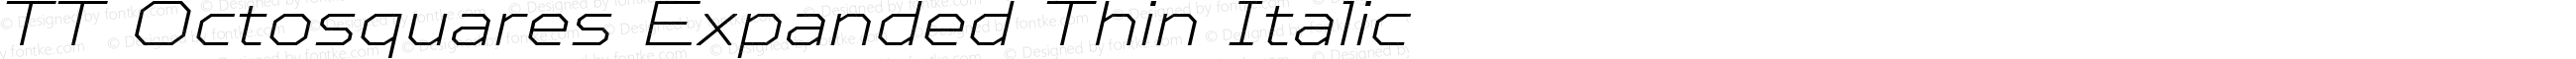 TT Octosquares Expanded Thin Italic